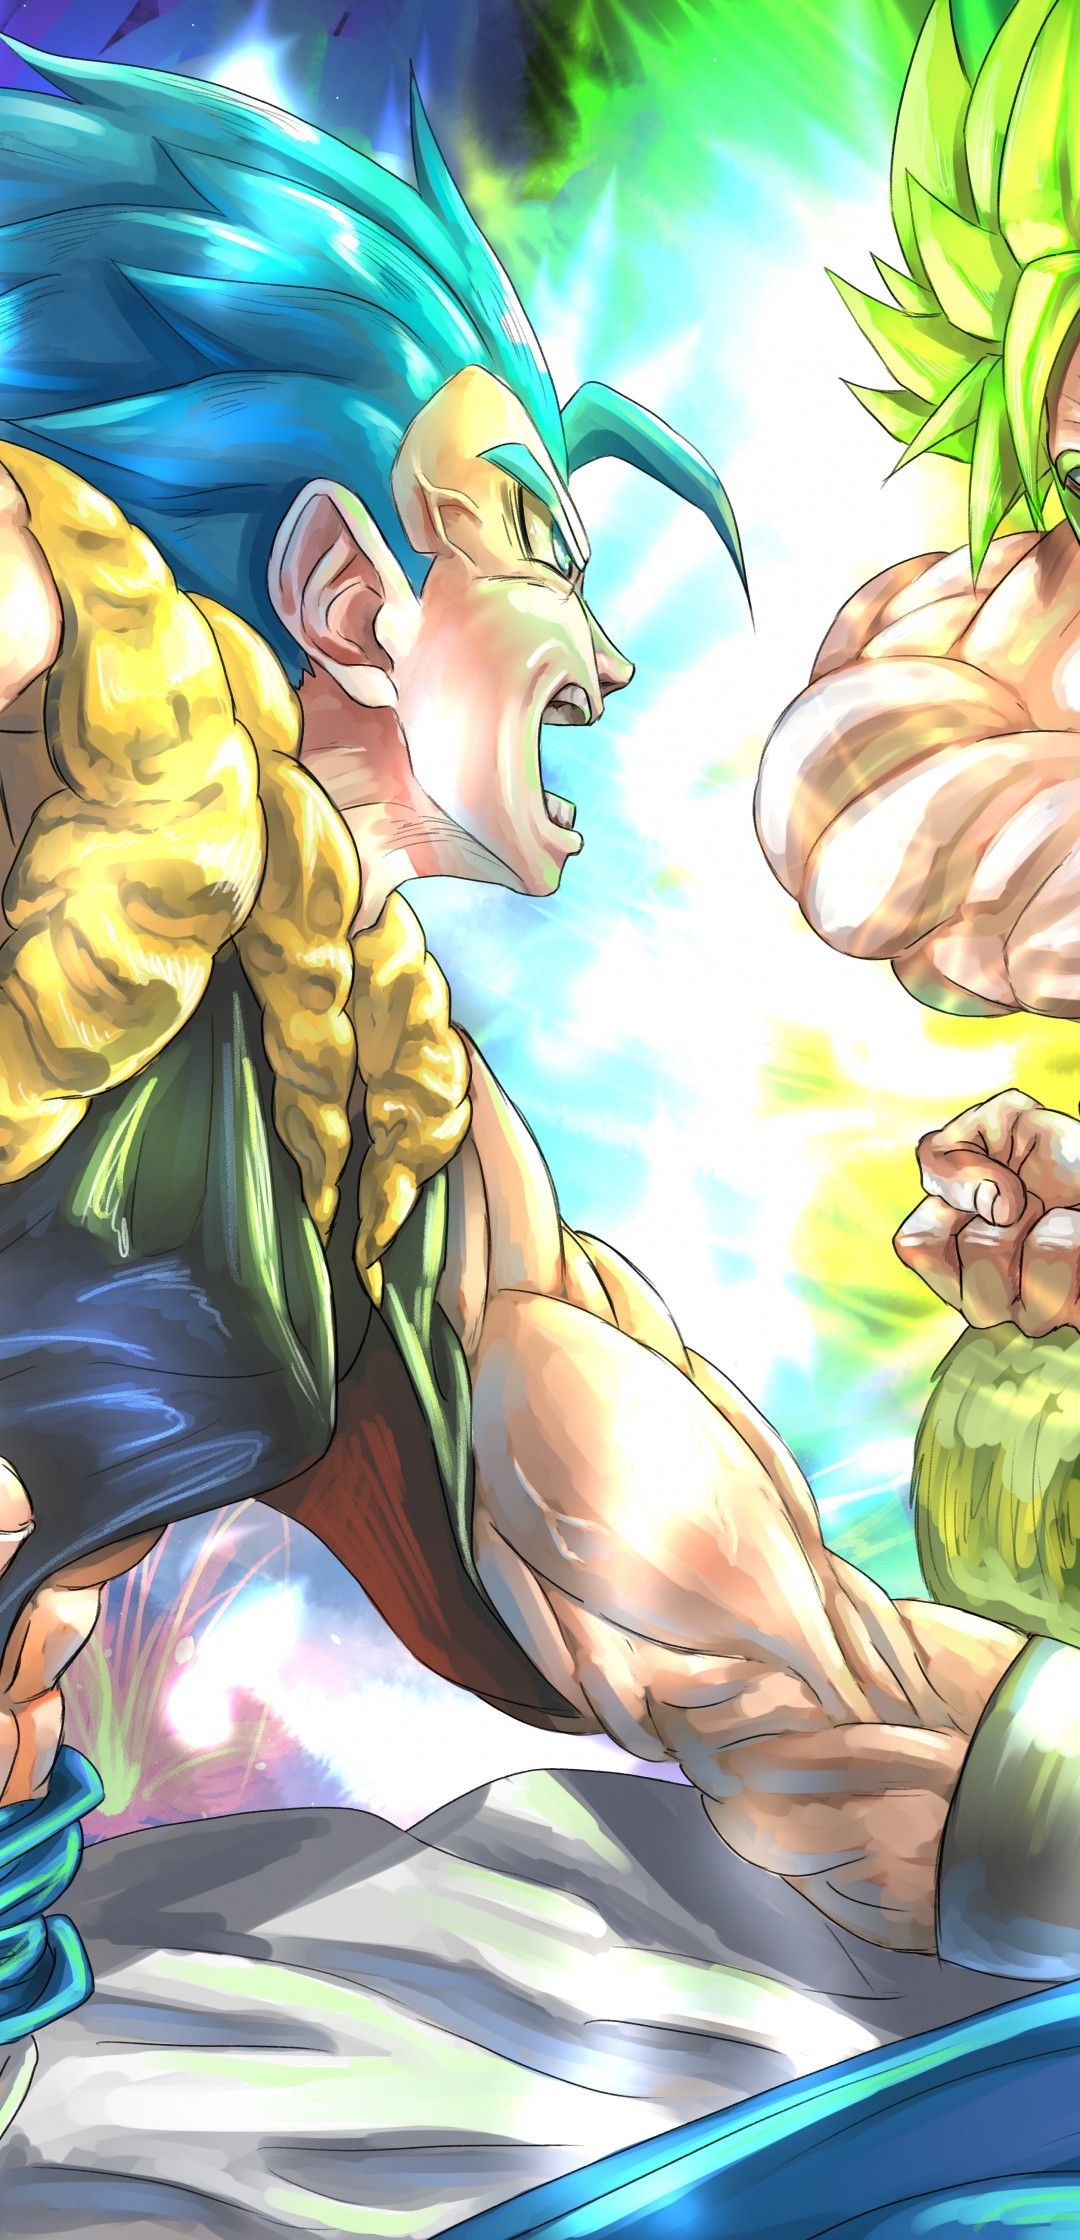 Download 1080x2240 Goku Vs Broly, Dragon Ball Super: Broly, Artwork, Scream Wallpaper for Huawei P20 Pro